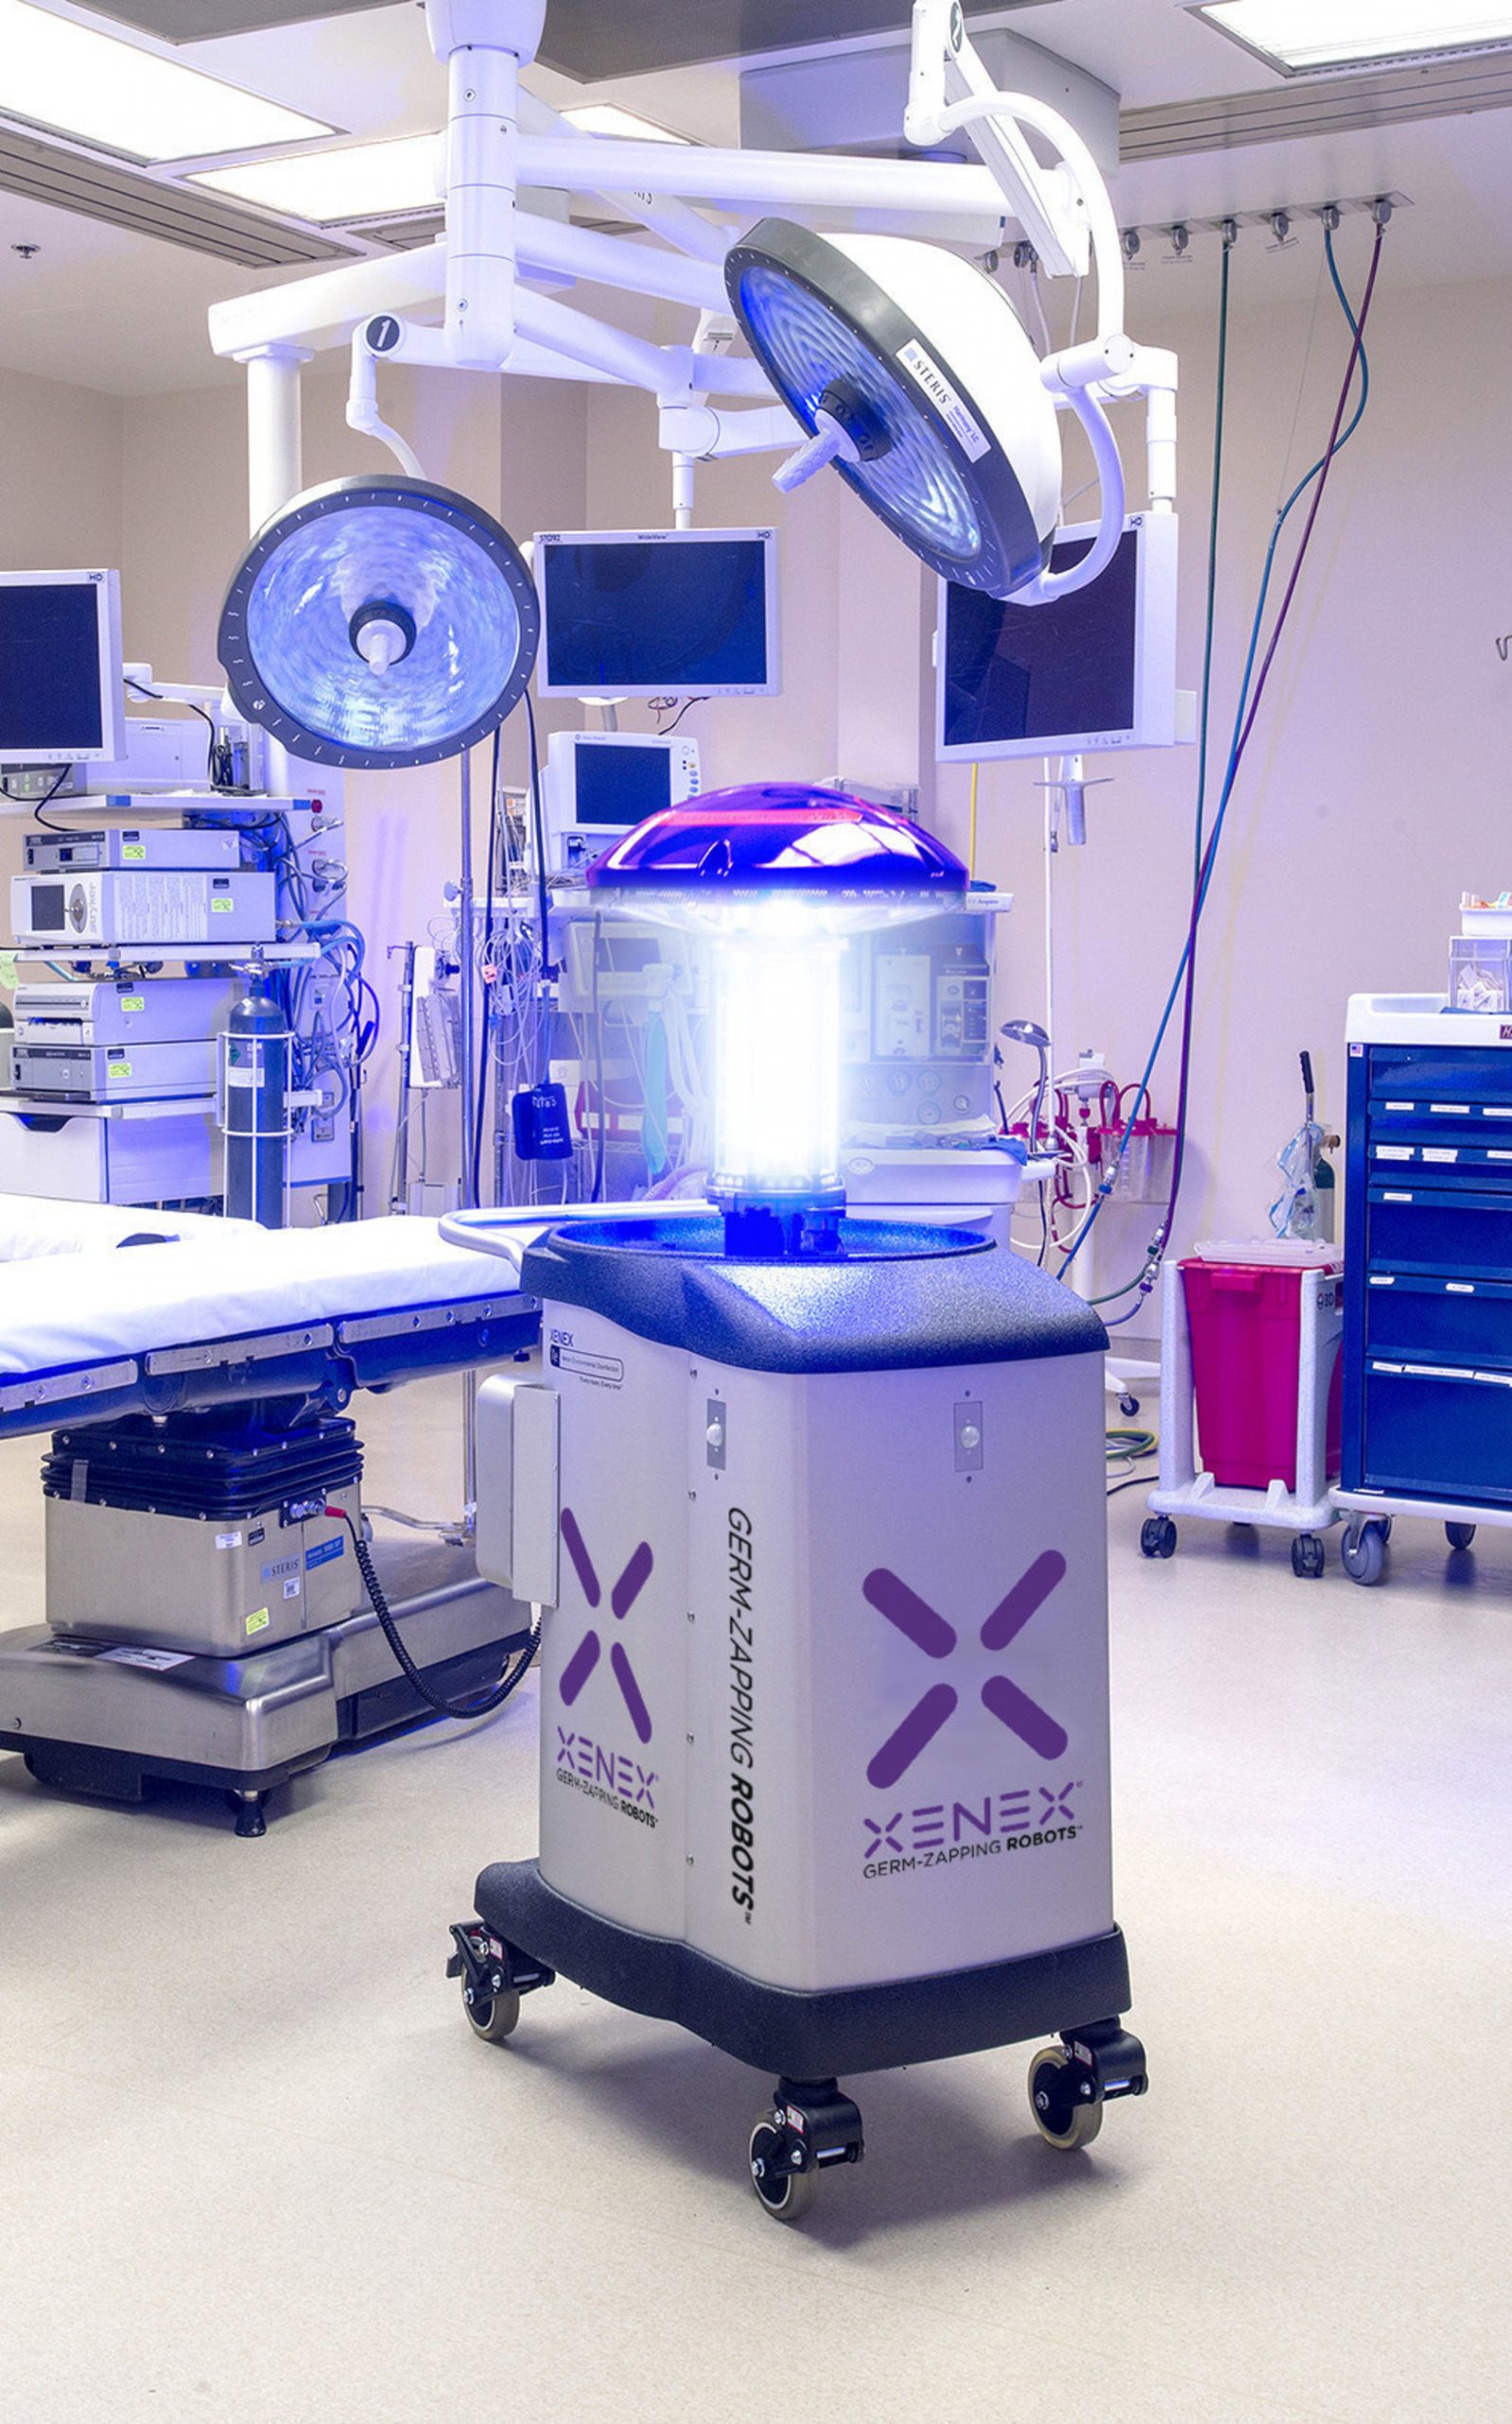 Xenon UV germ-killing Robots